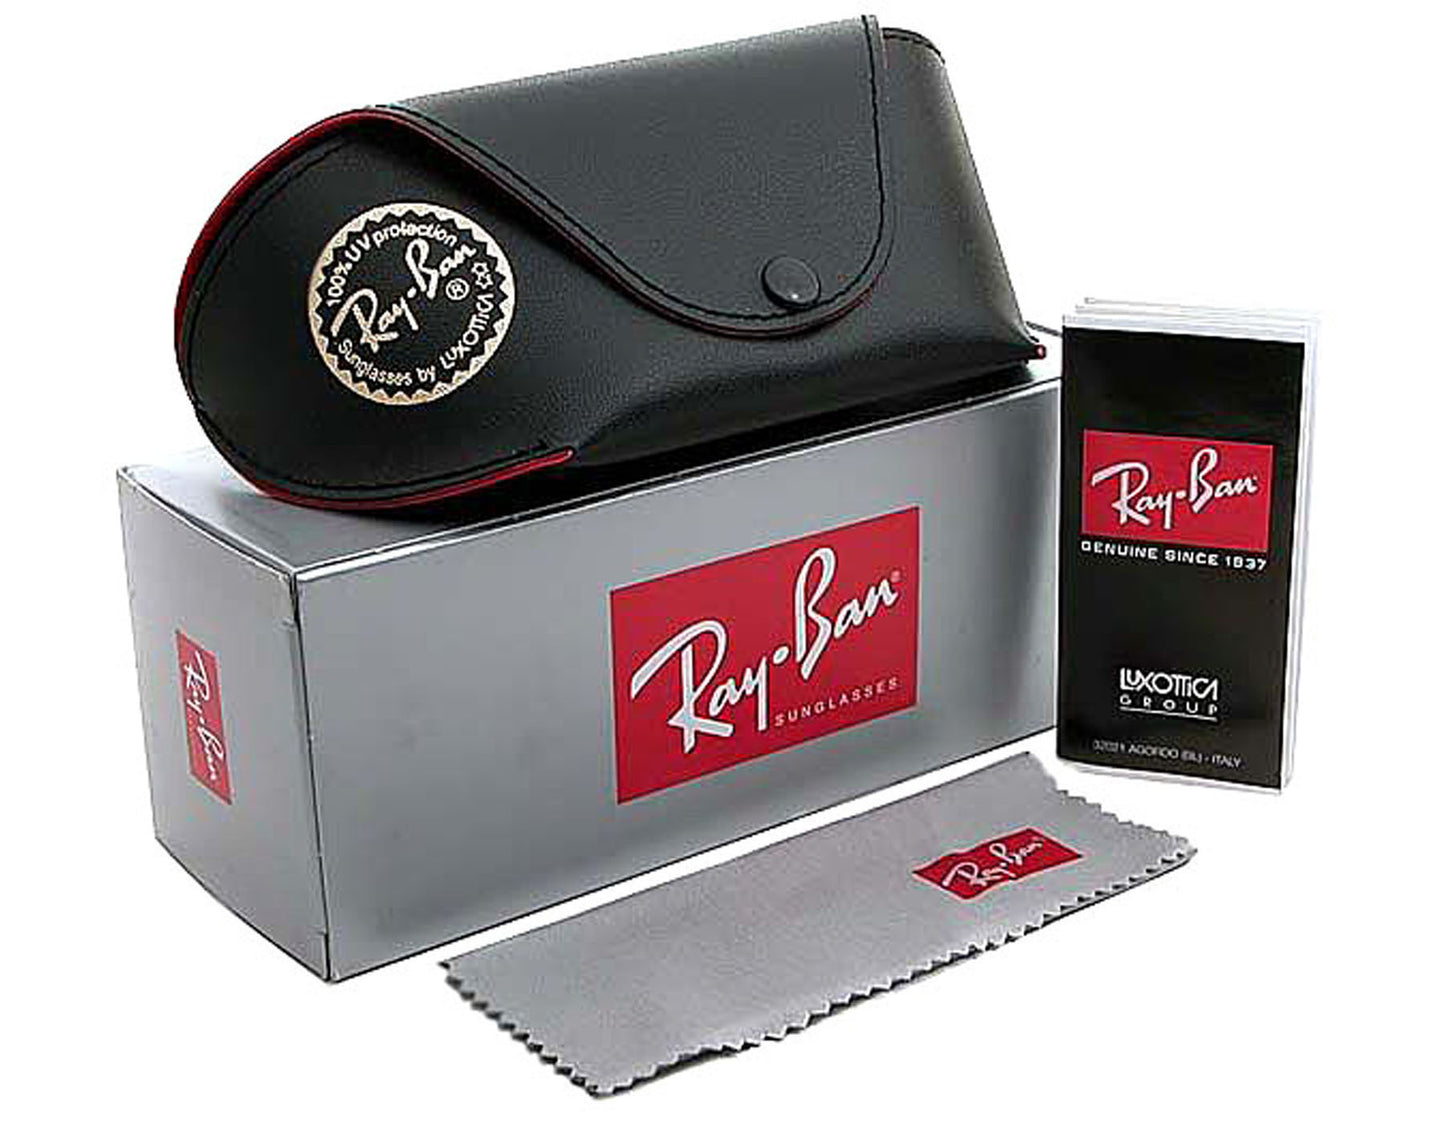 Ray Ban RB3029-L2112-62  New Sunglasses